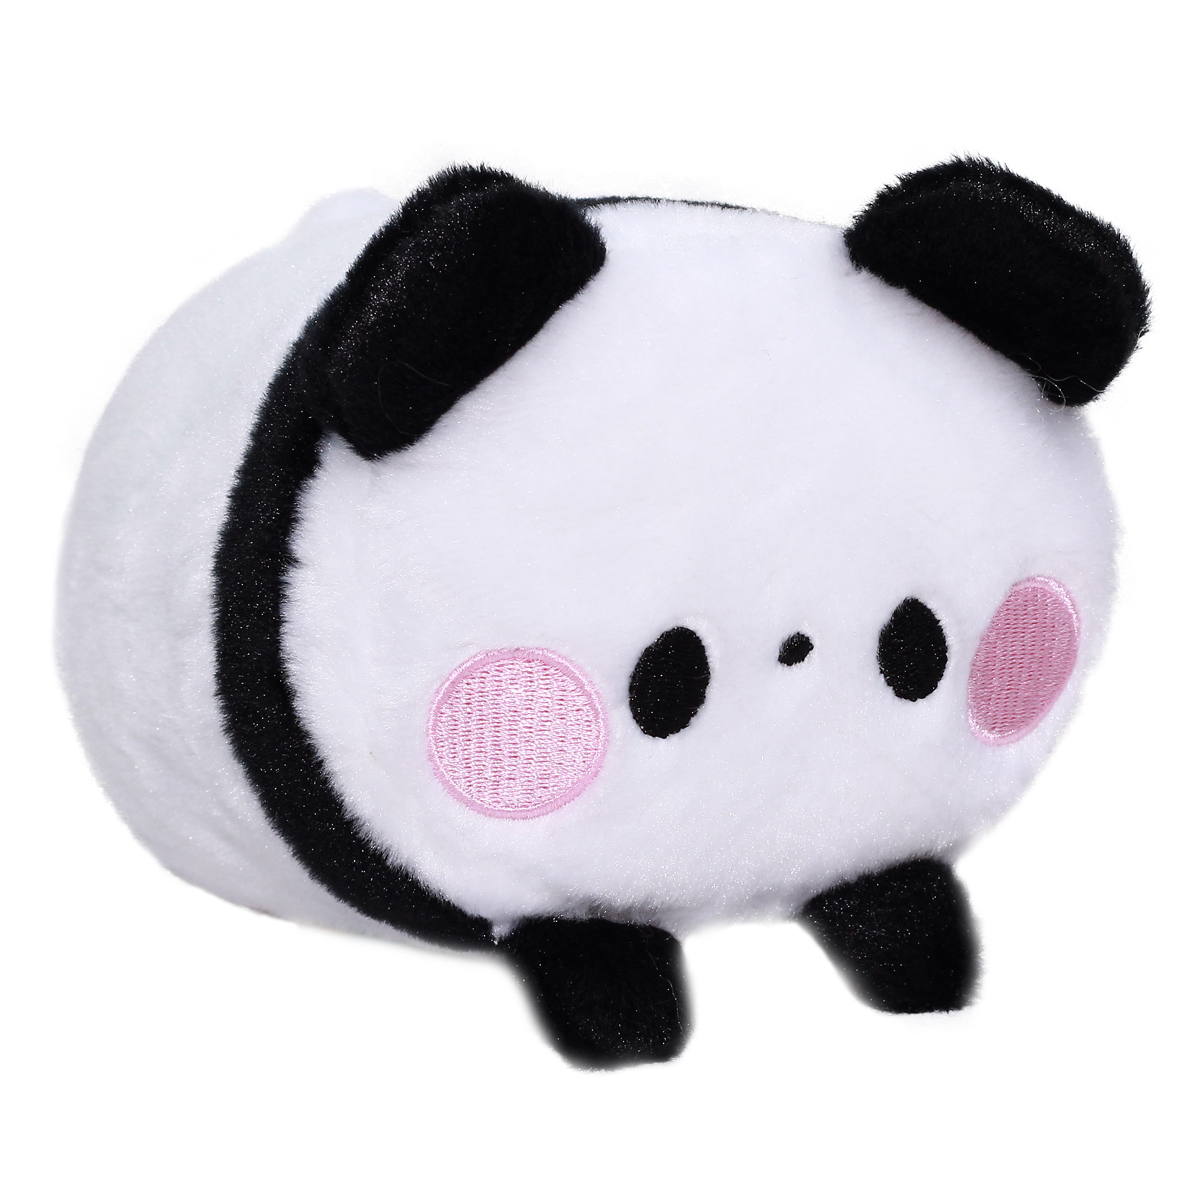 Super Soft Mochii Cute Panda Plush Japanese Squishy Plushie Toy Kawaii Bear Black White 5